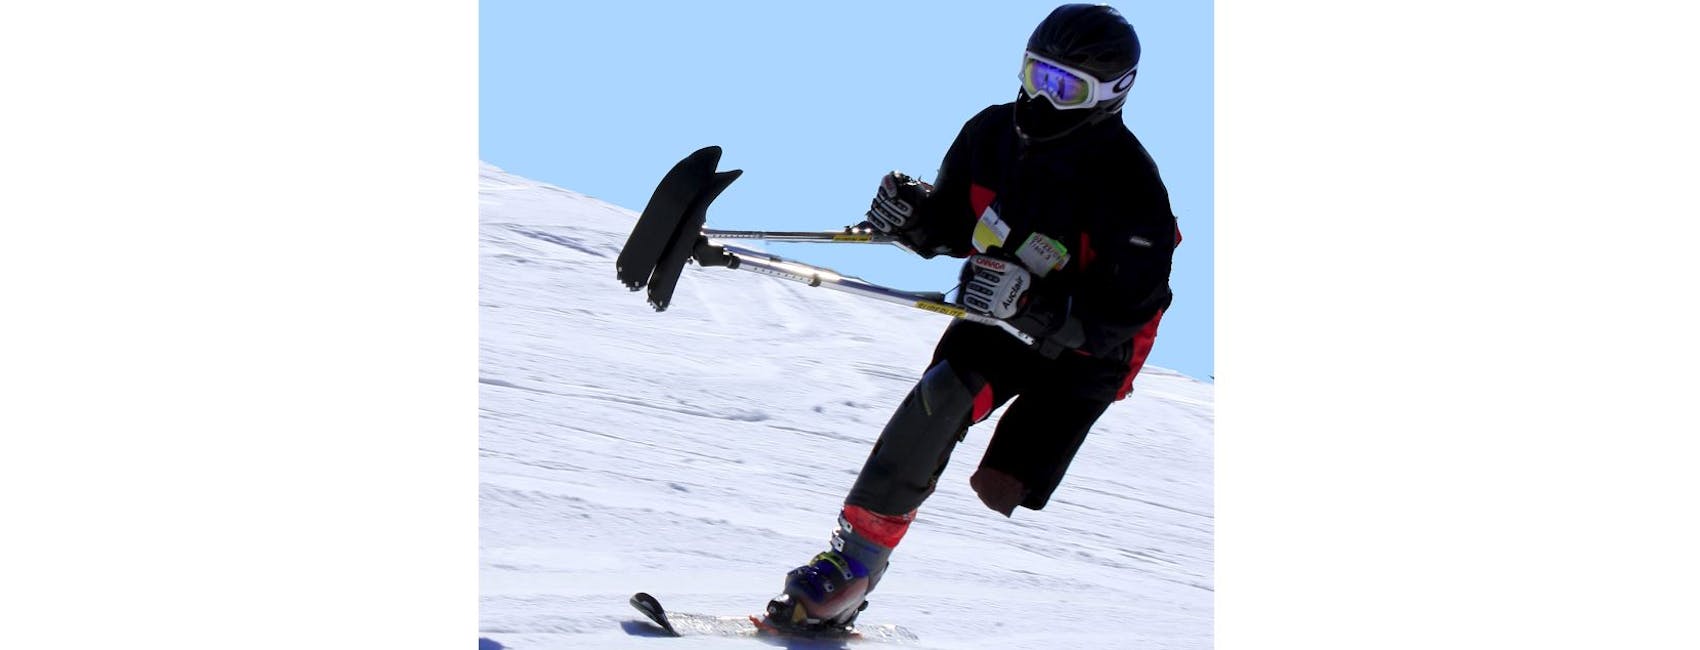 One-legged Track-3 skier showcasing their skiing skills. 